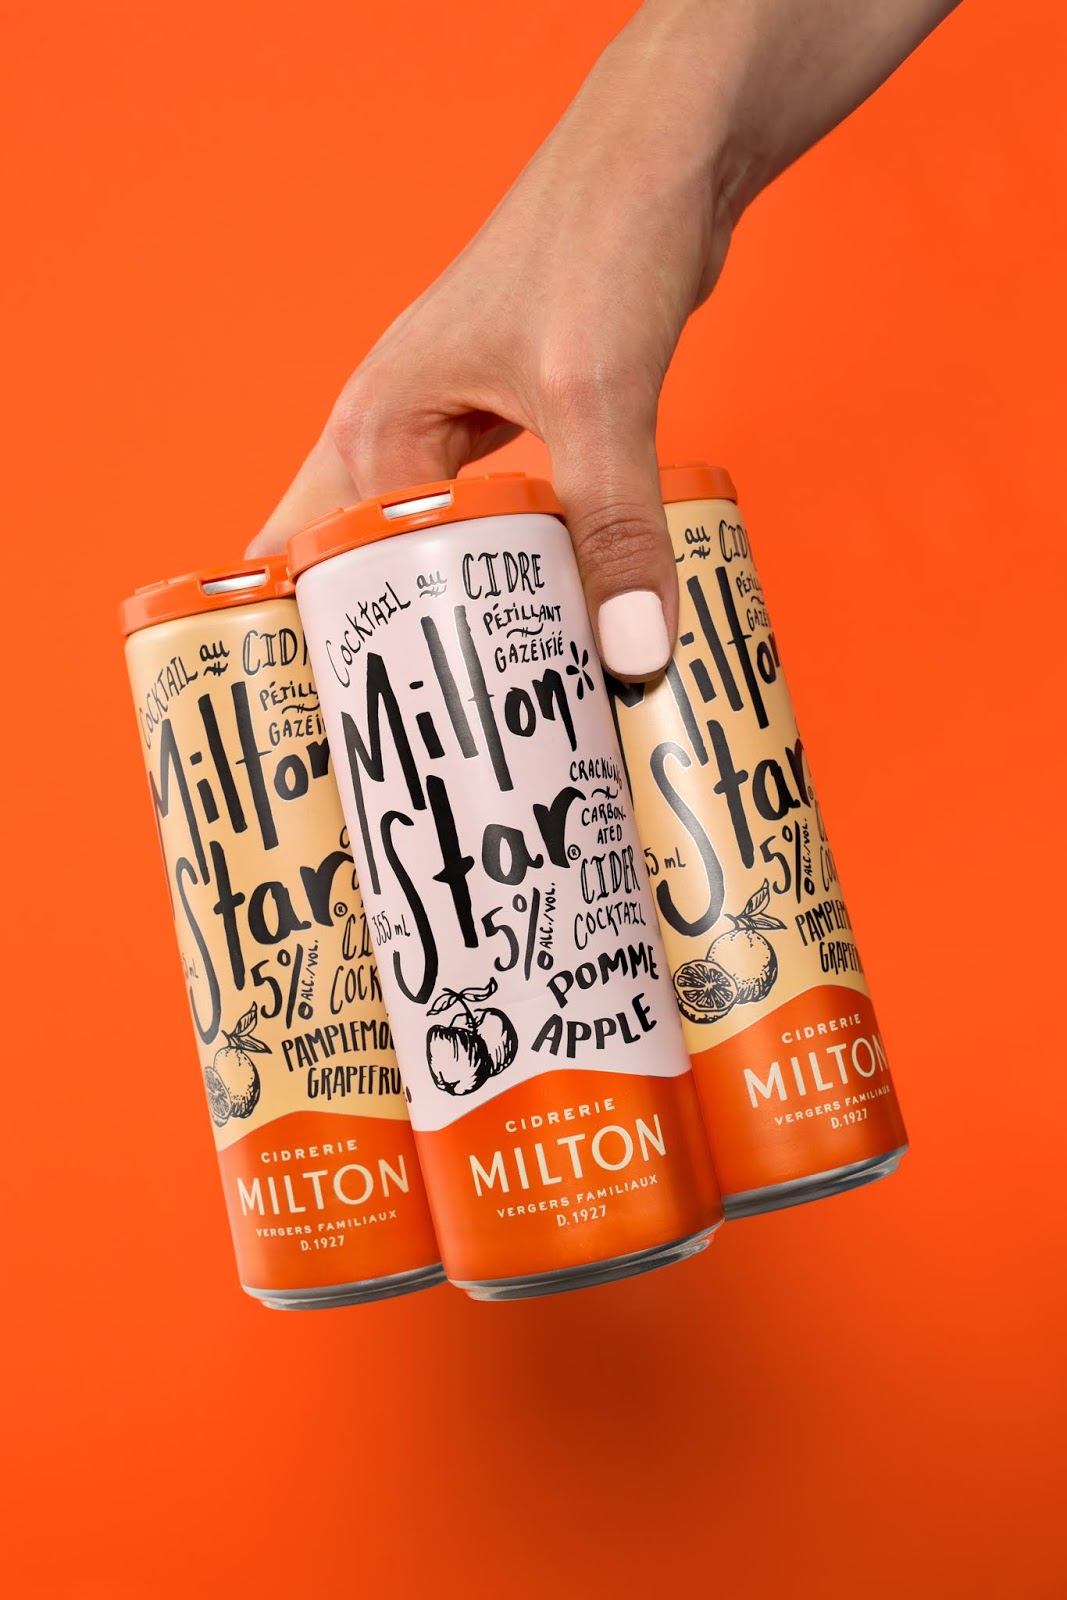 Milton Star罐装苹果酒包装设计